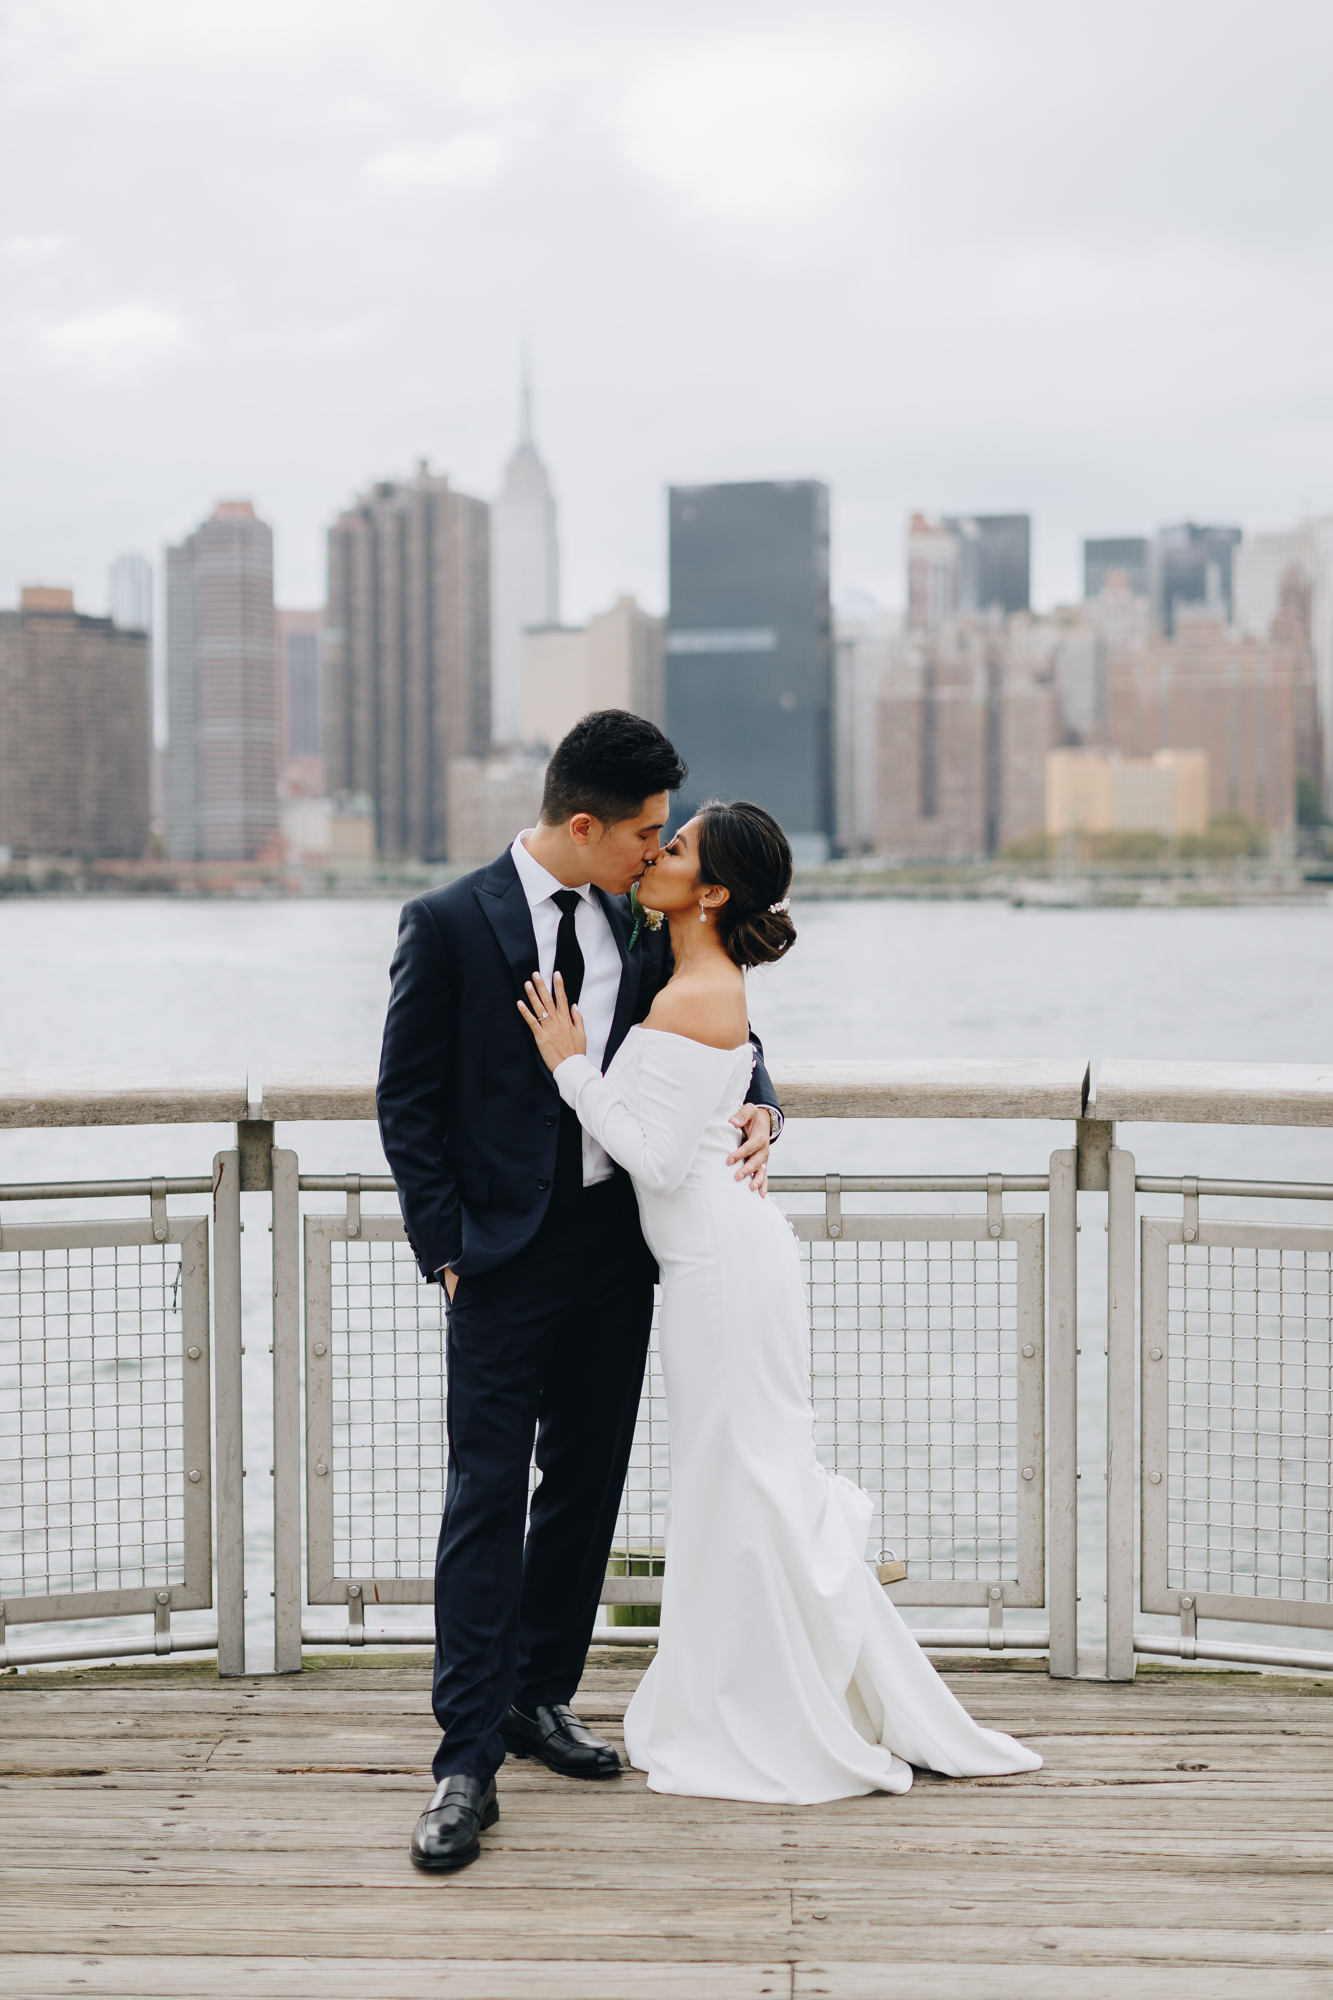 Lovely New York City Wedding Photography